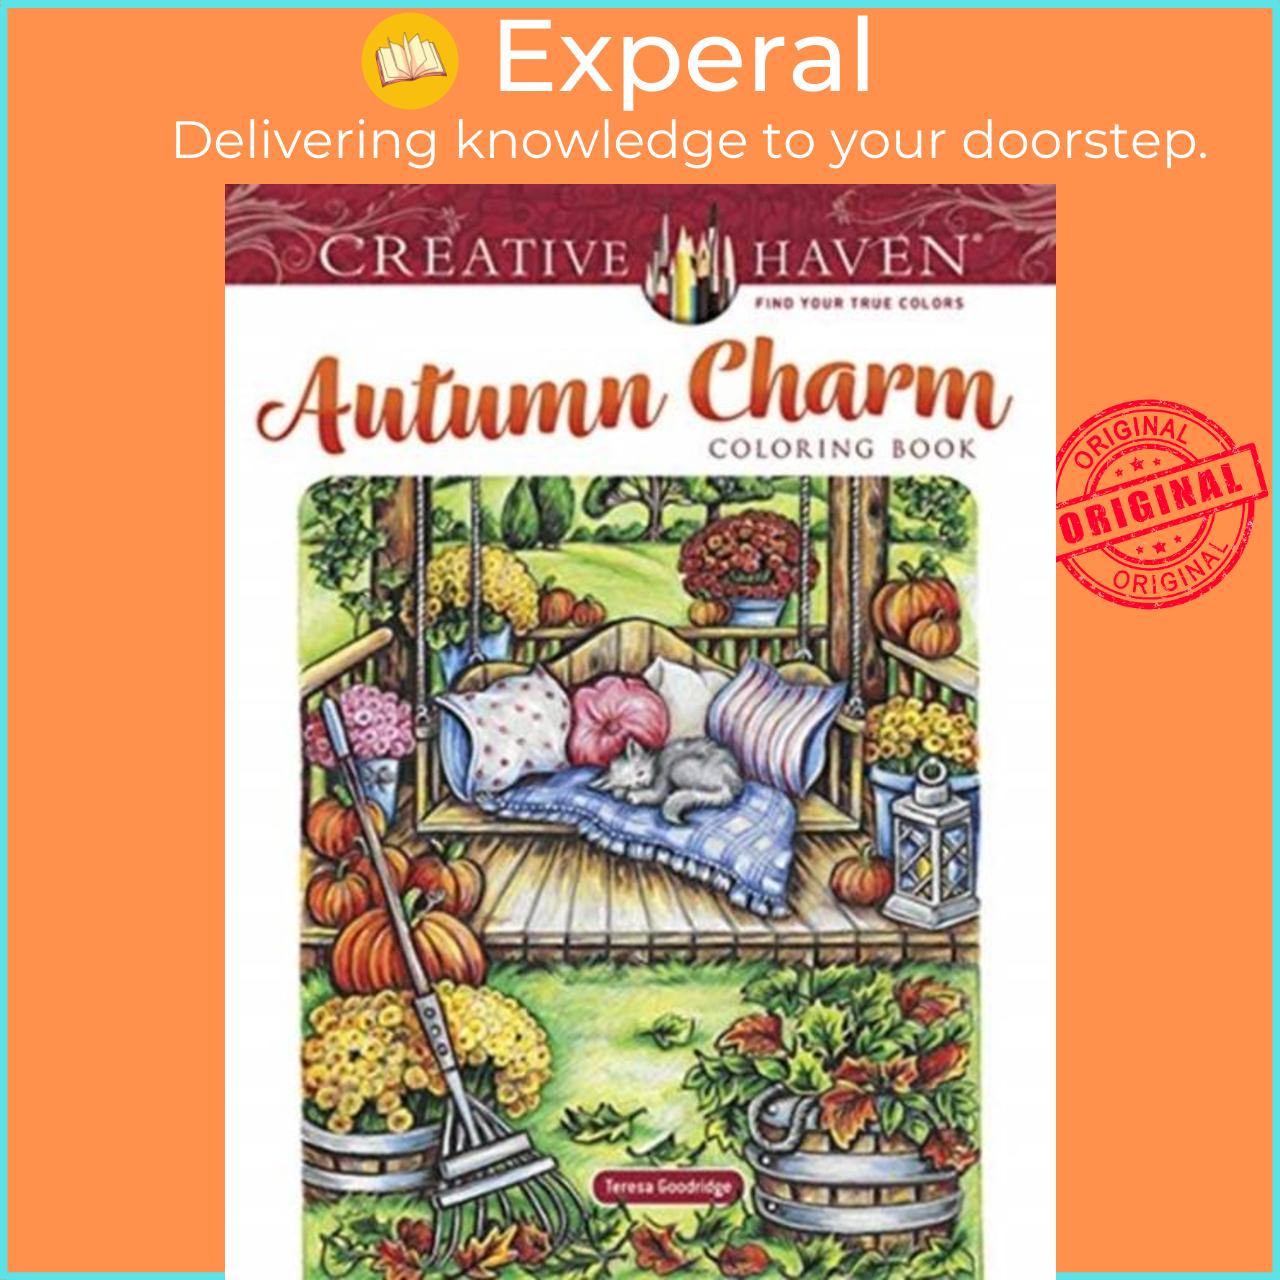 Sách - Creative Haven Autumn Charm Coloring Book by Teresa Goodridge (UK edition, paperback)